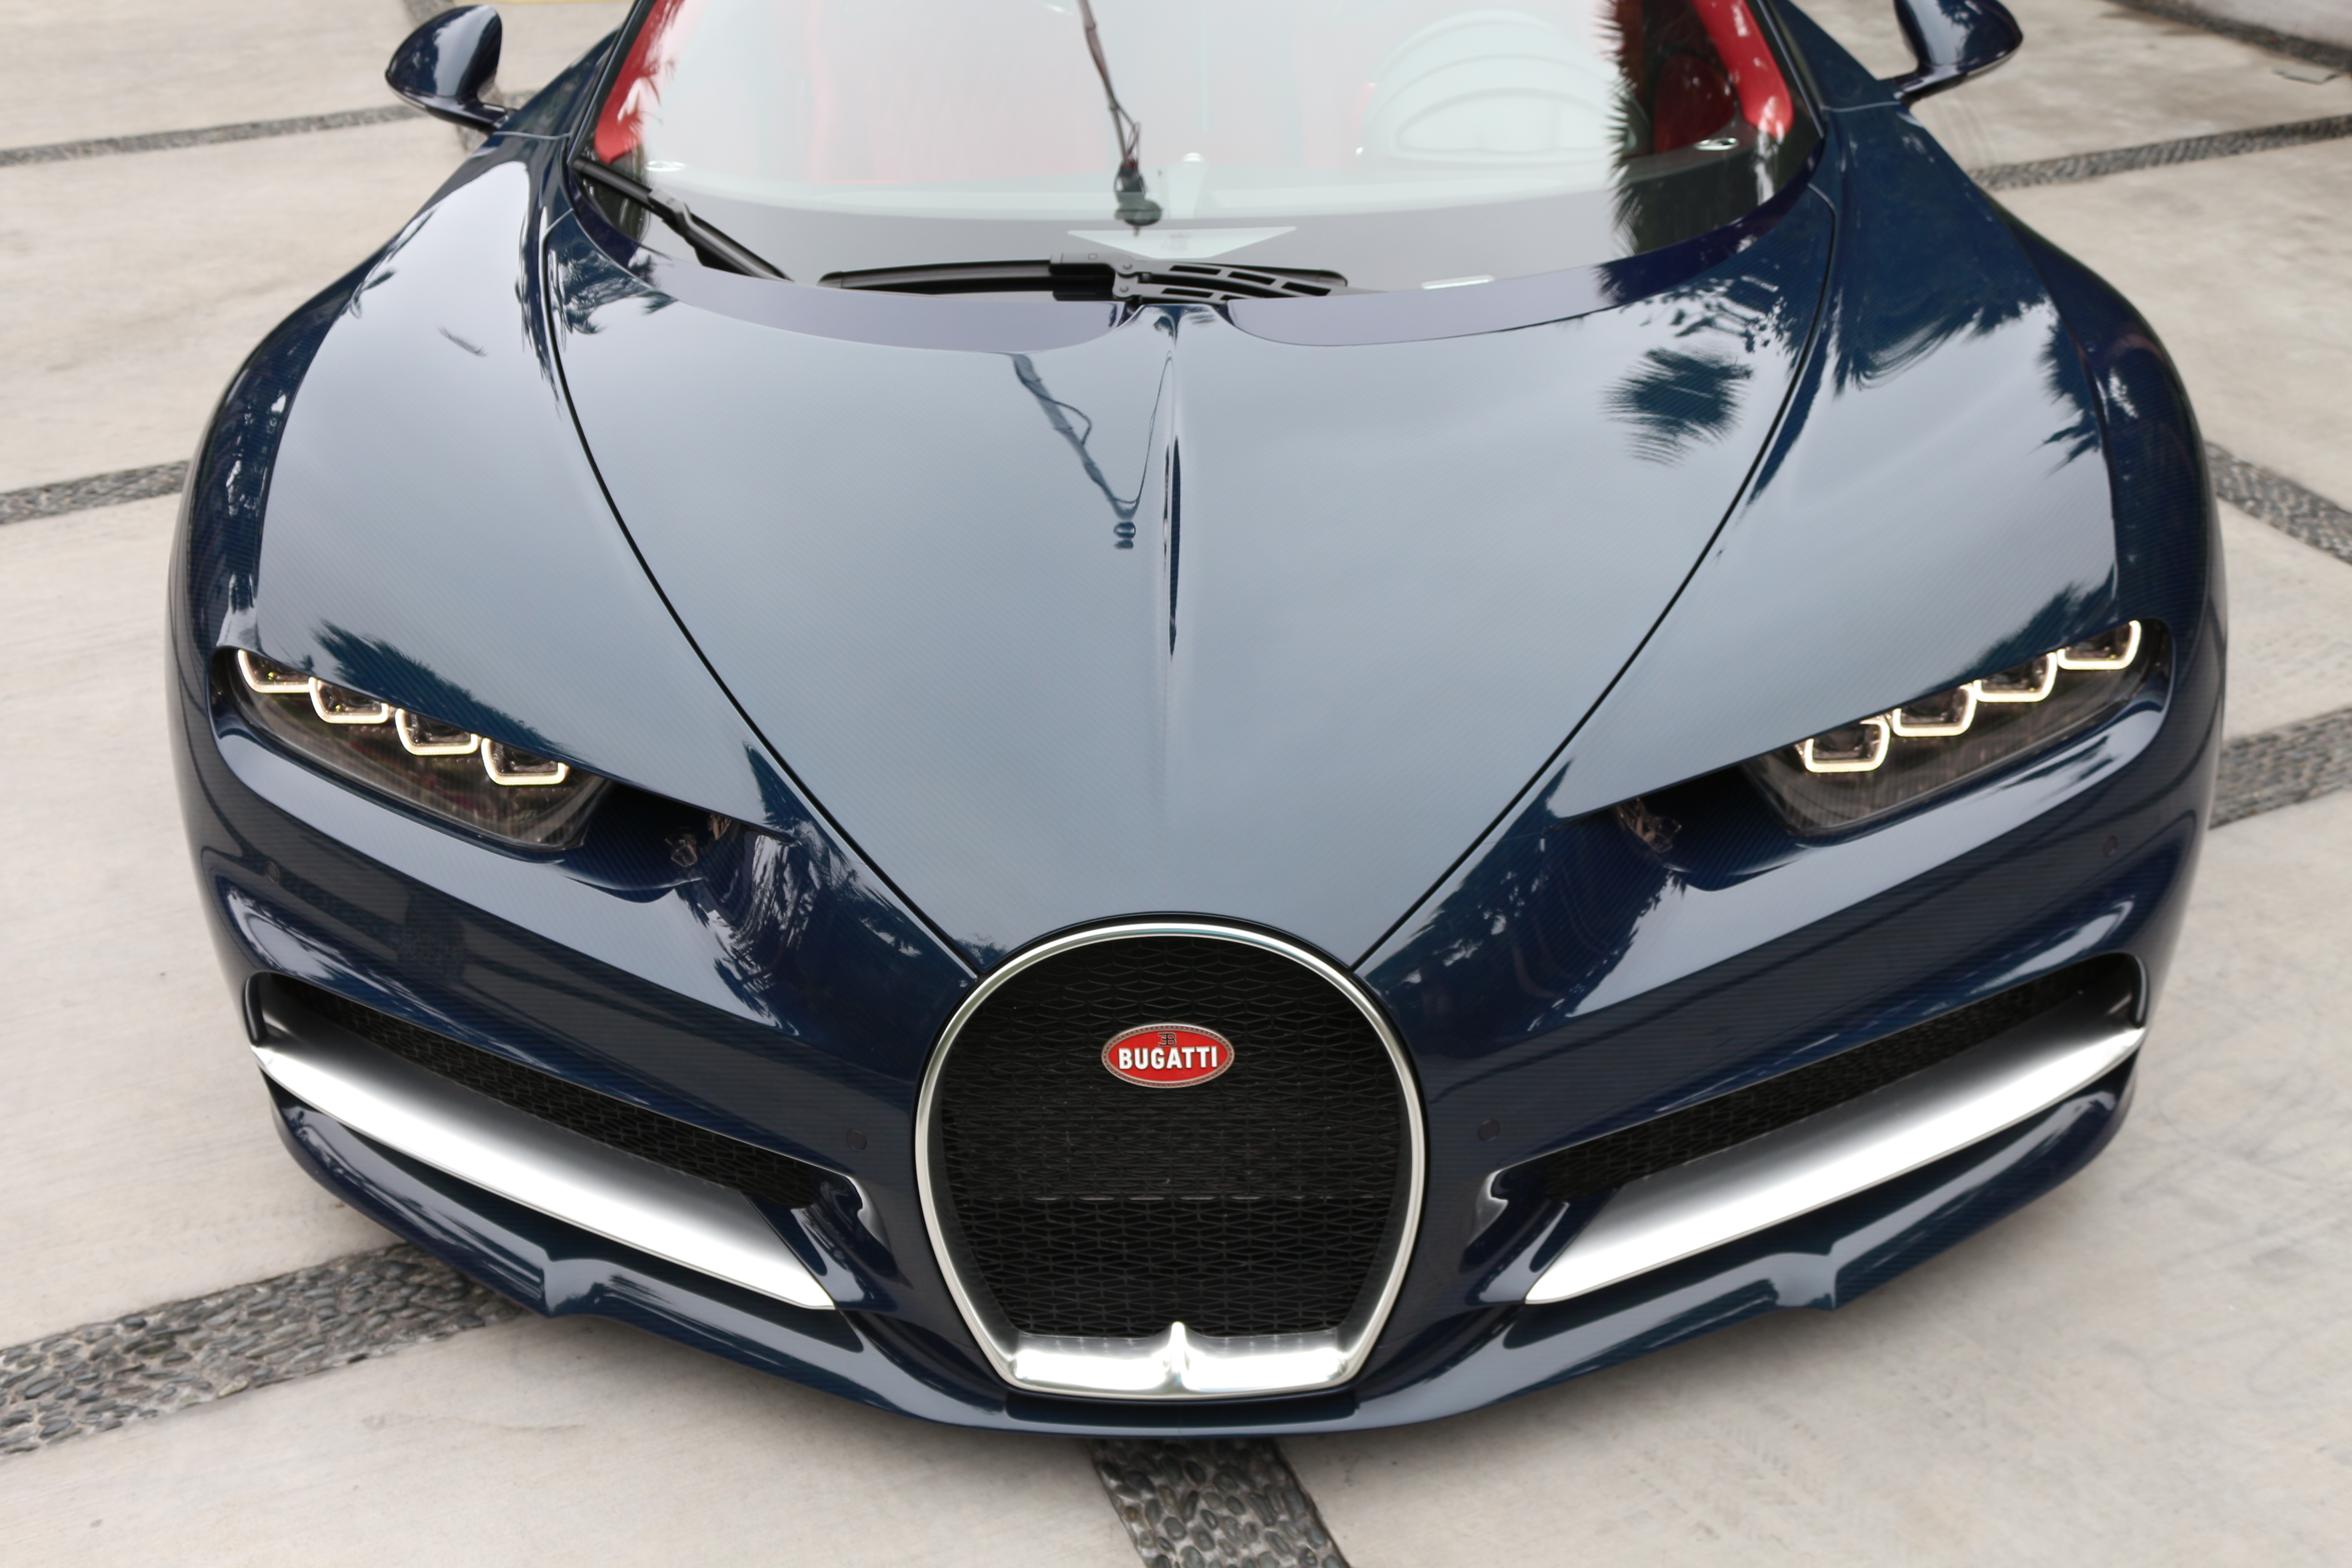 6SpeedOnline.com Bugatti Chiron Driven Review 1,500 Horsepower $3,000,000 Exotic